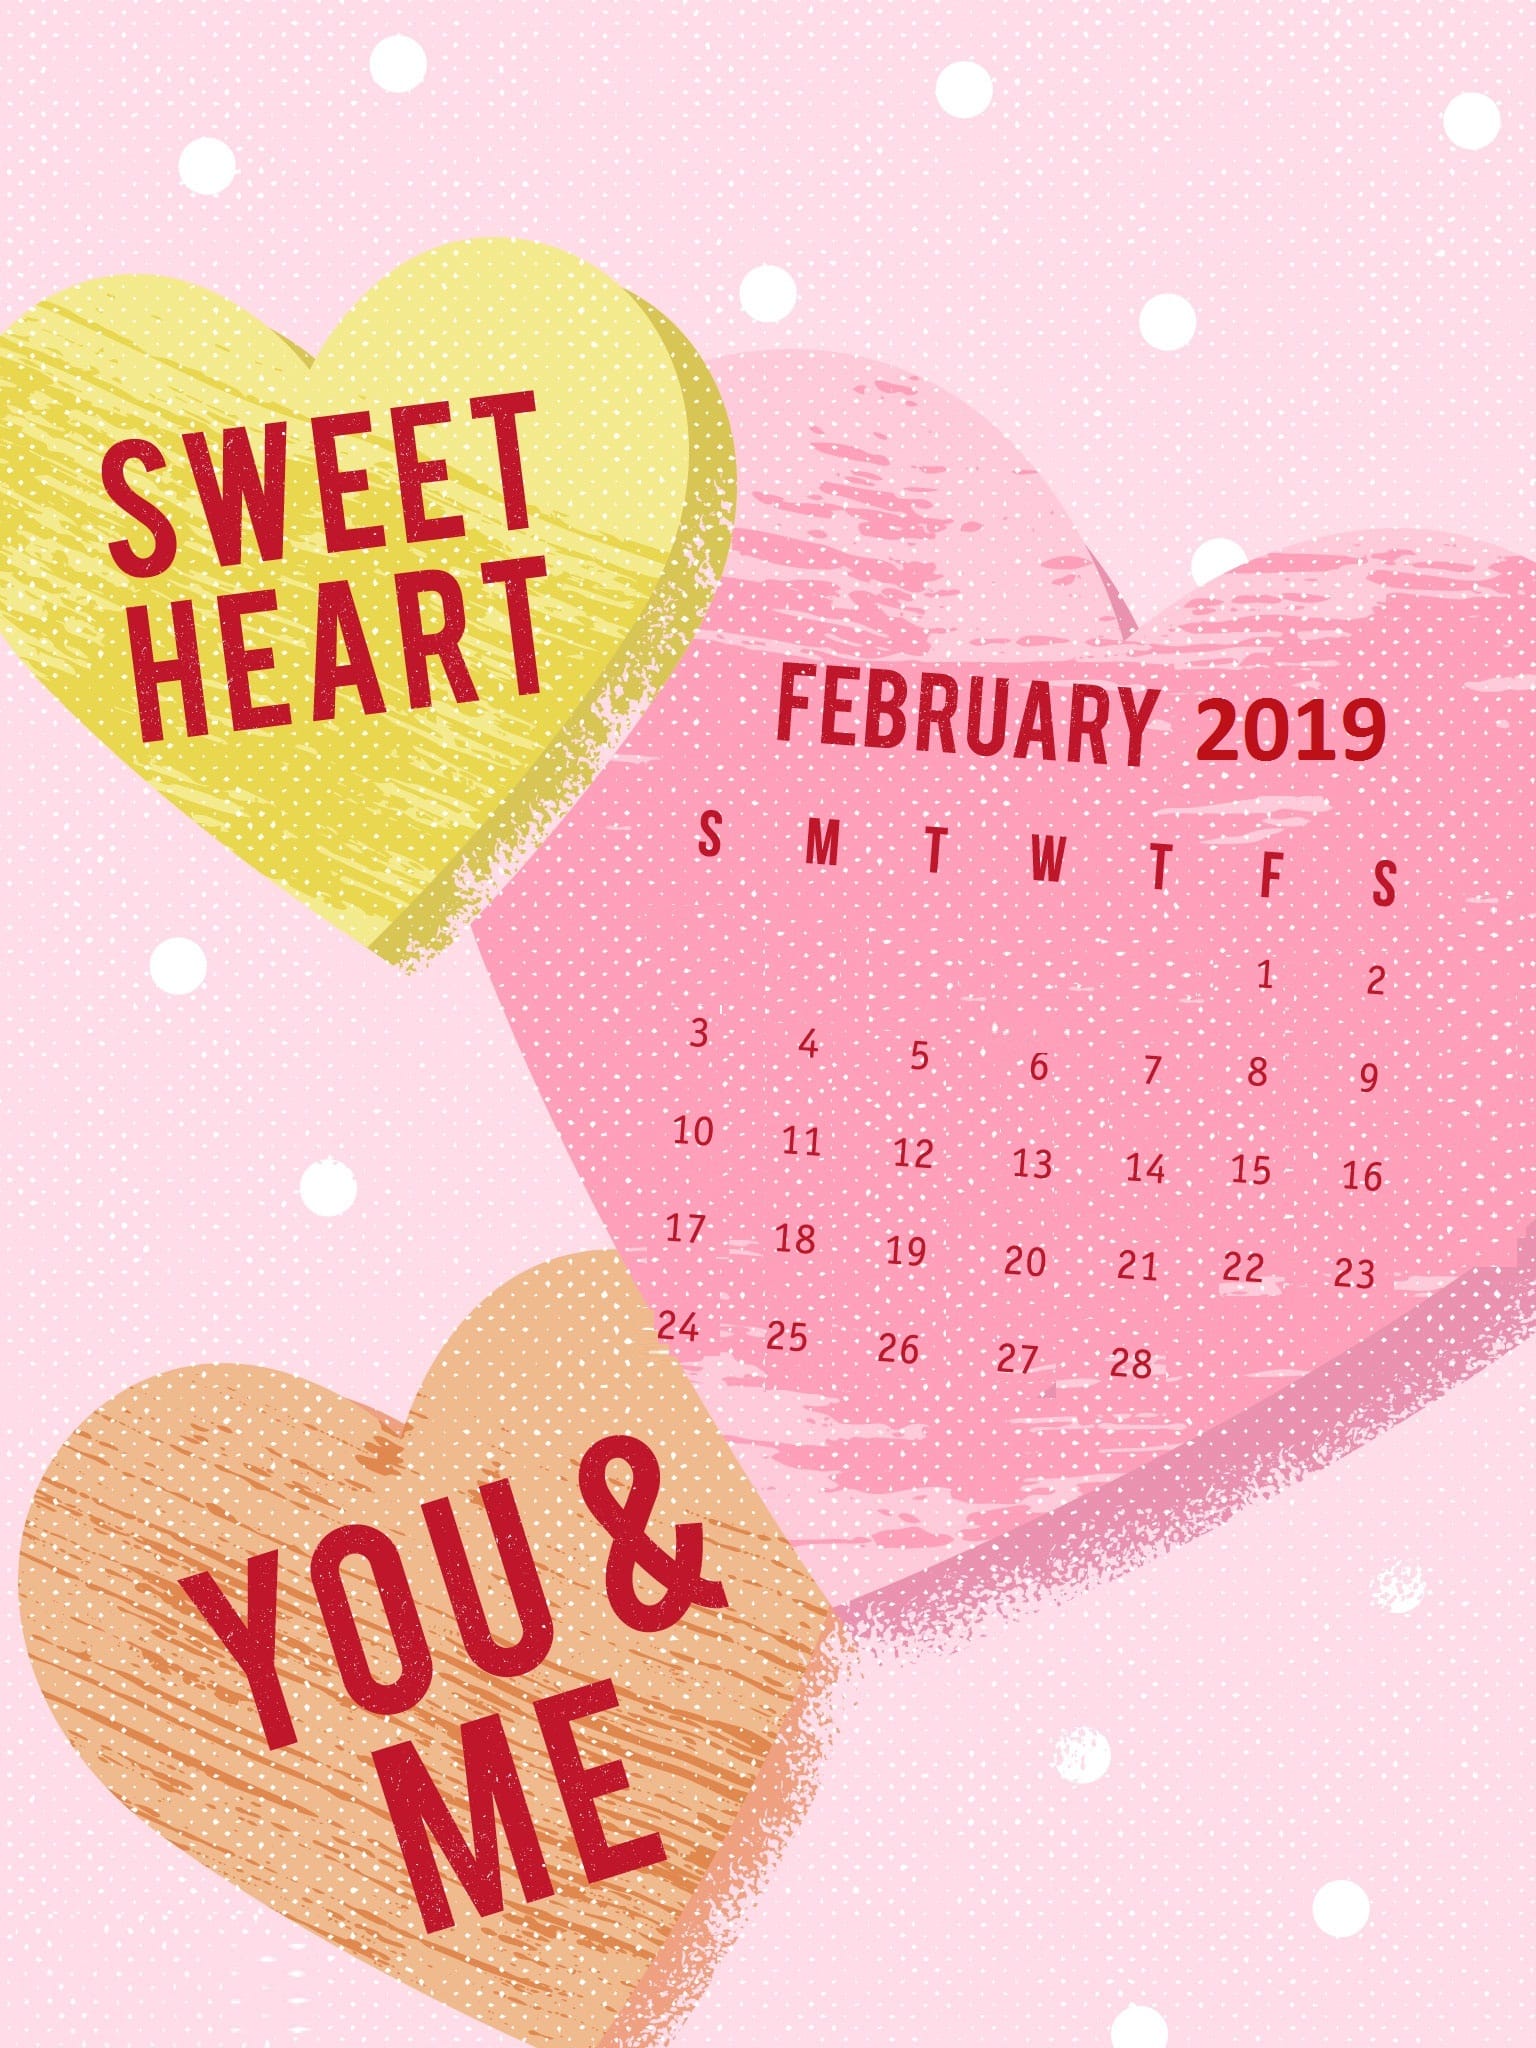 Heart February 2019 iPhone Calendar